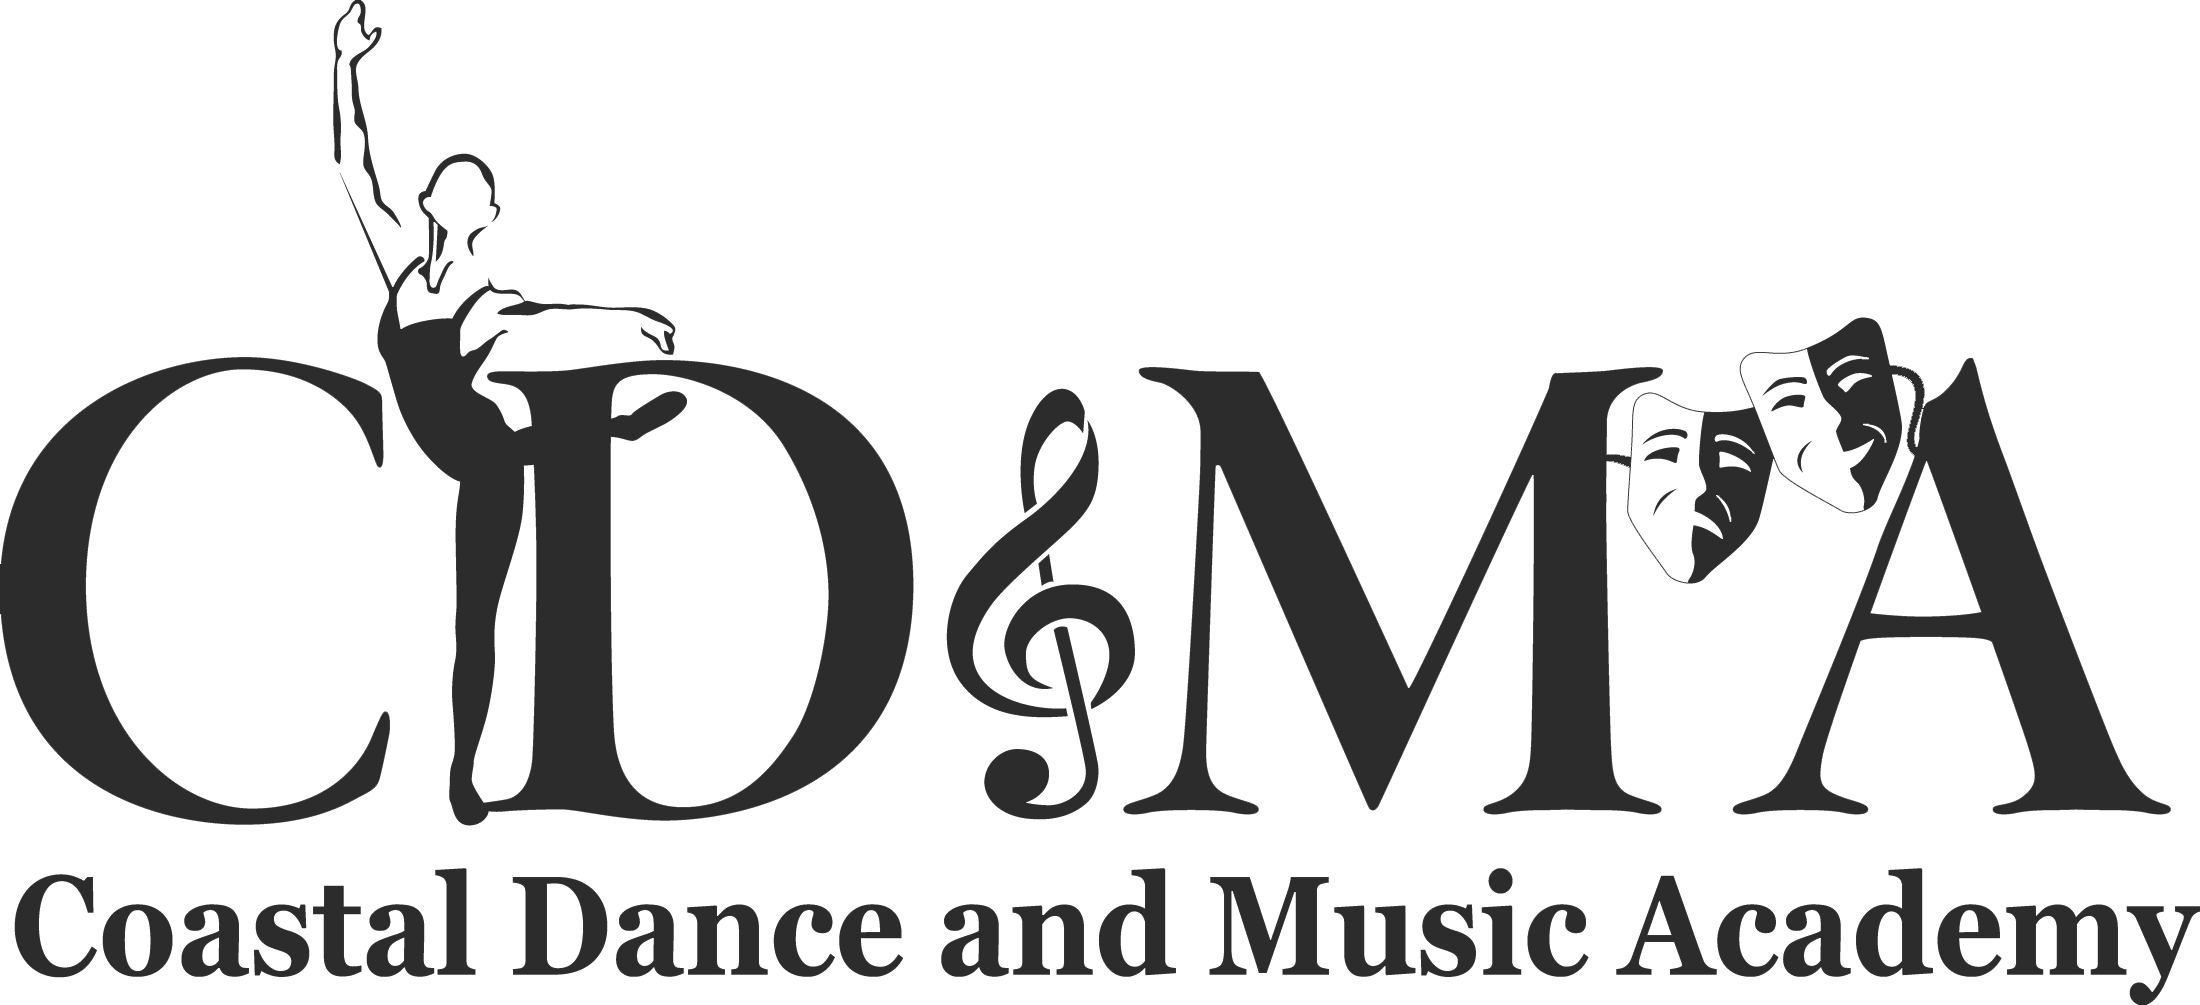 CDMA Logo - Home. Coastal Dance and Music Academy